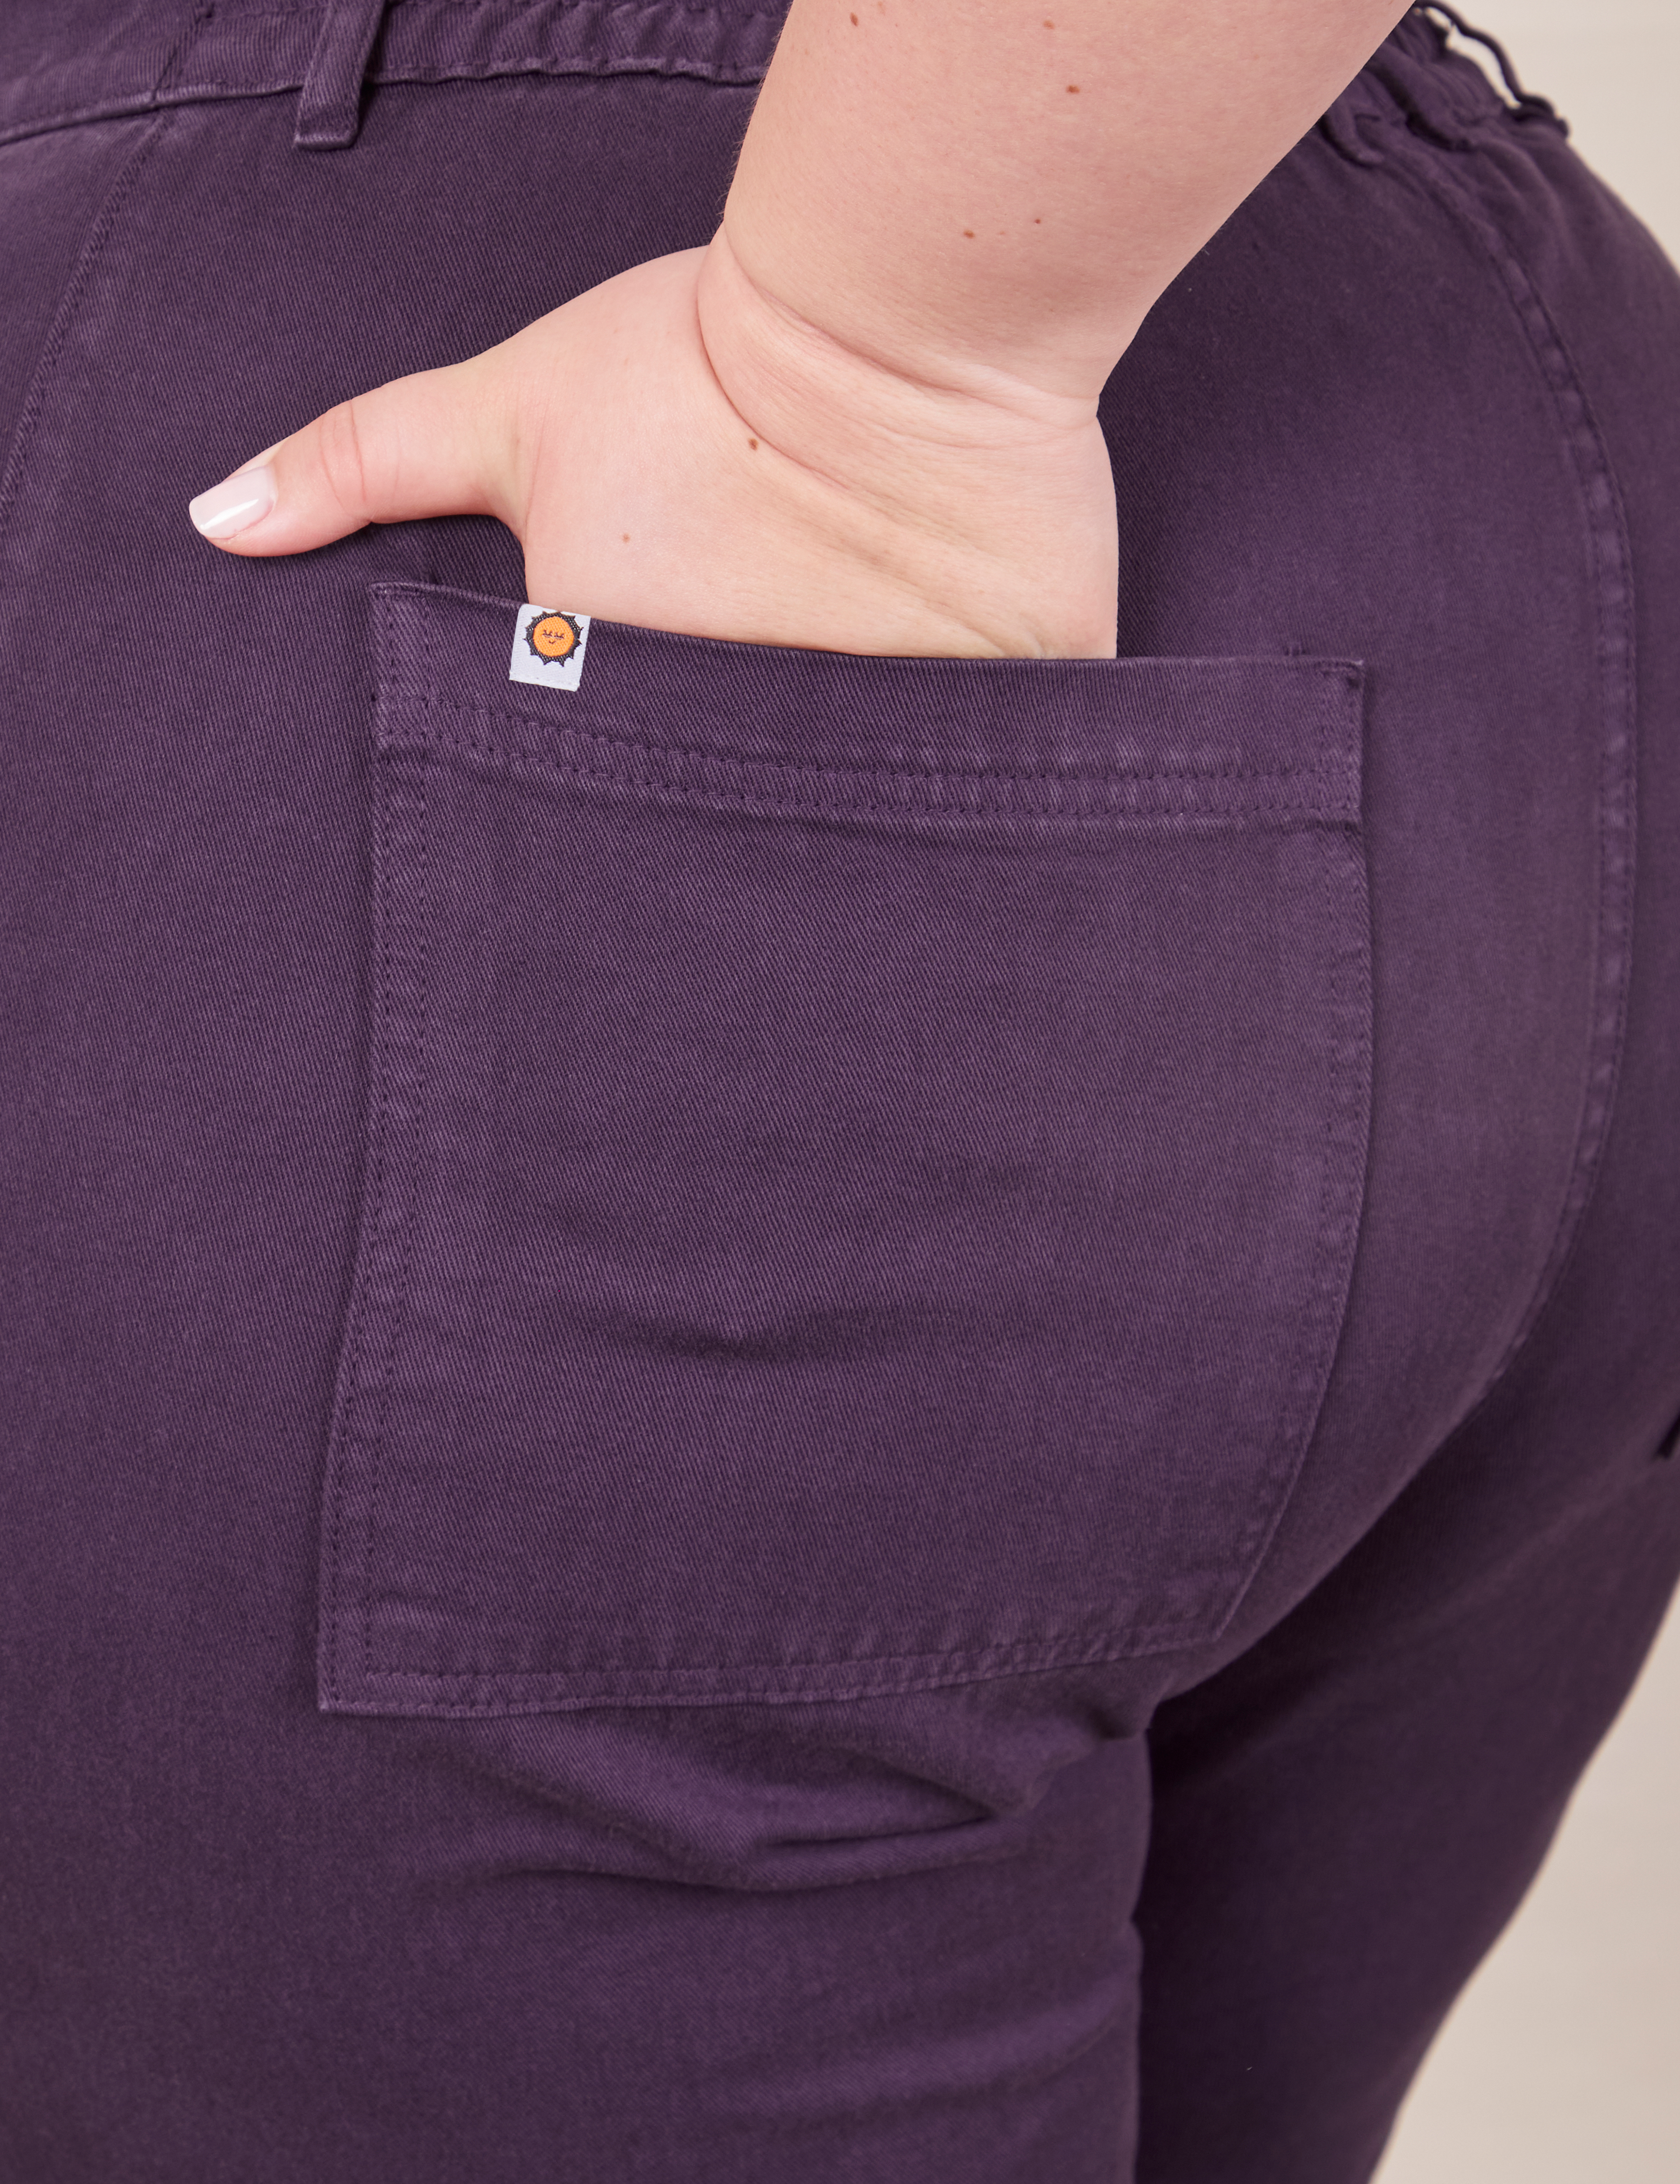 Back pocket close up of Petite Work Pants in Nebula Purple worn by Ashley